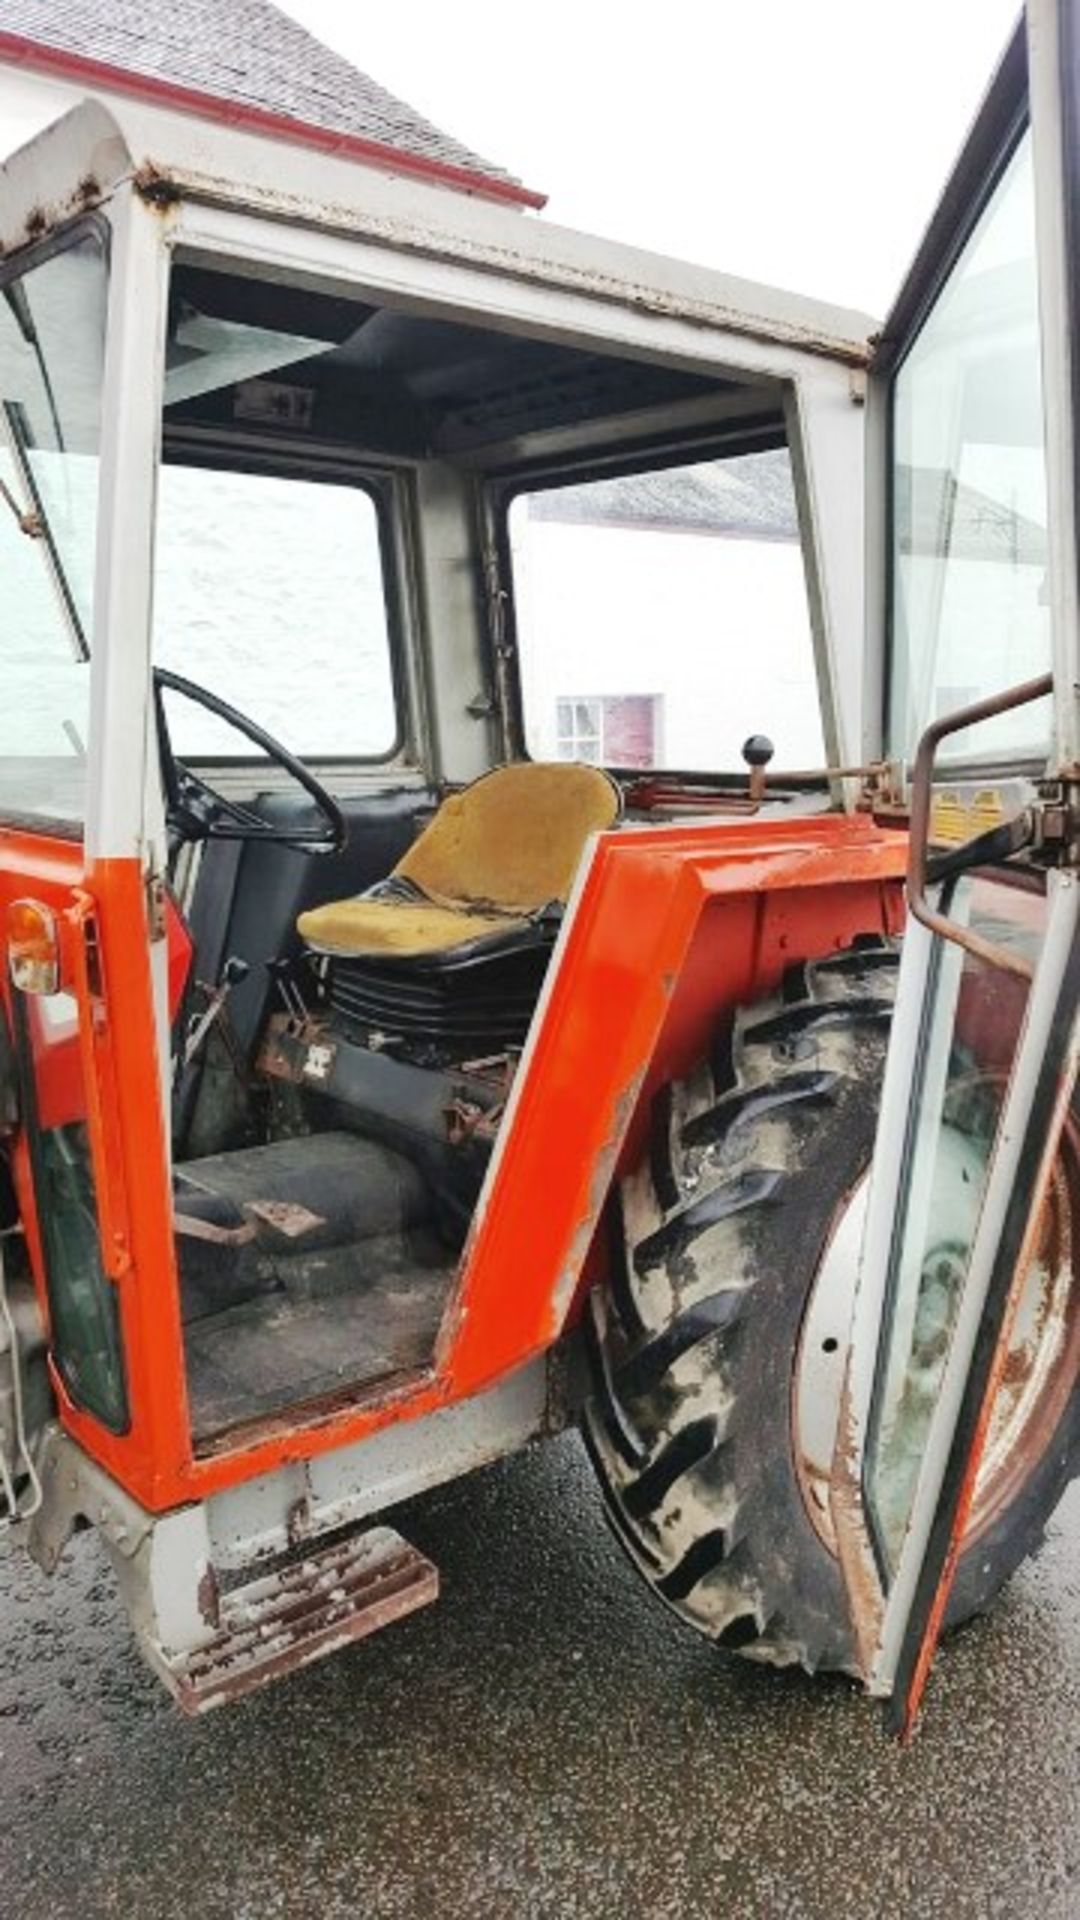 1979 MASSEY FERSUSON 550 tractor s/n 619197. Reg No OIA 804. 863hrs (not verifed) - Bild 5 aus 7